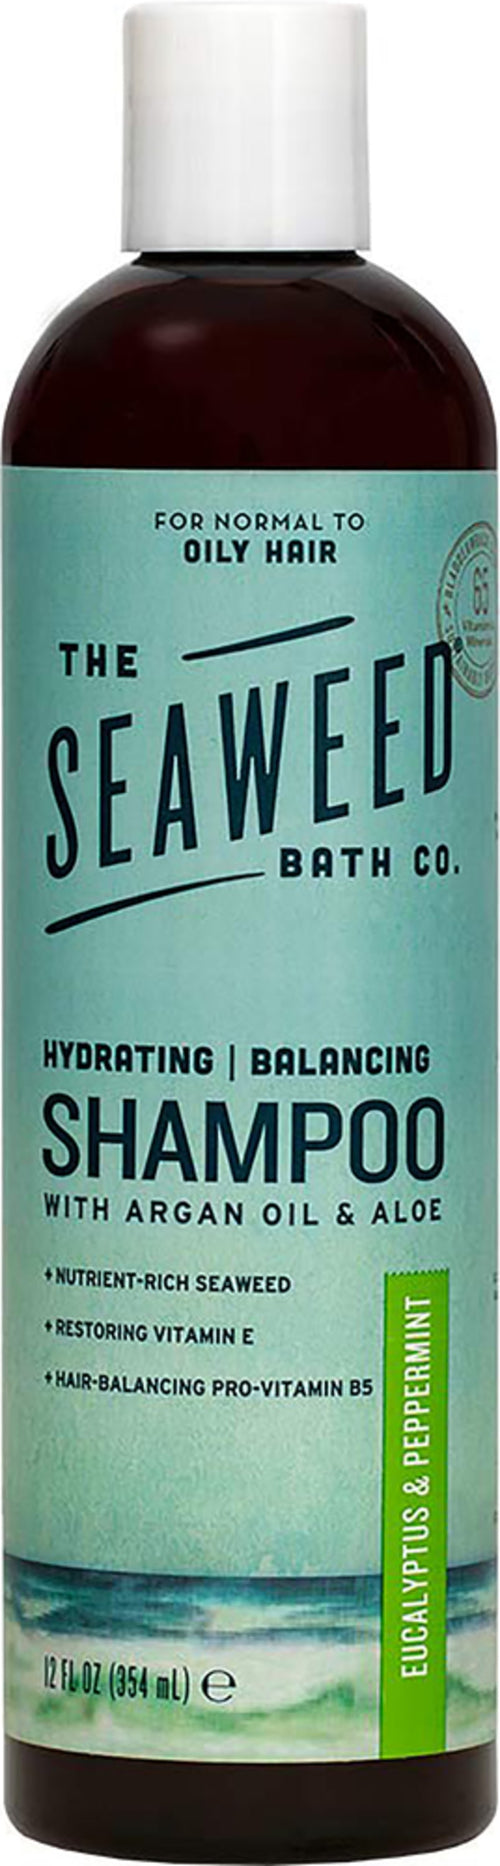 Shampoo all'argan, eucalipto e menta piperita 12 fl oz 354 mL Bottiglia    